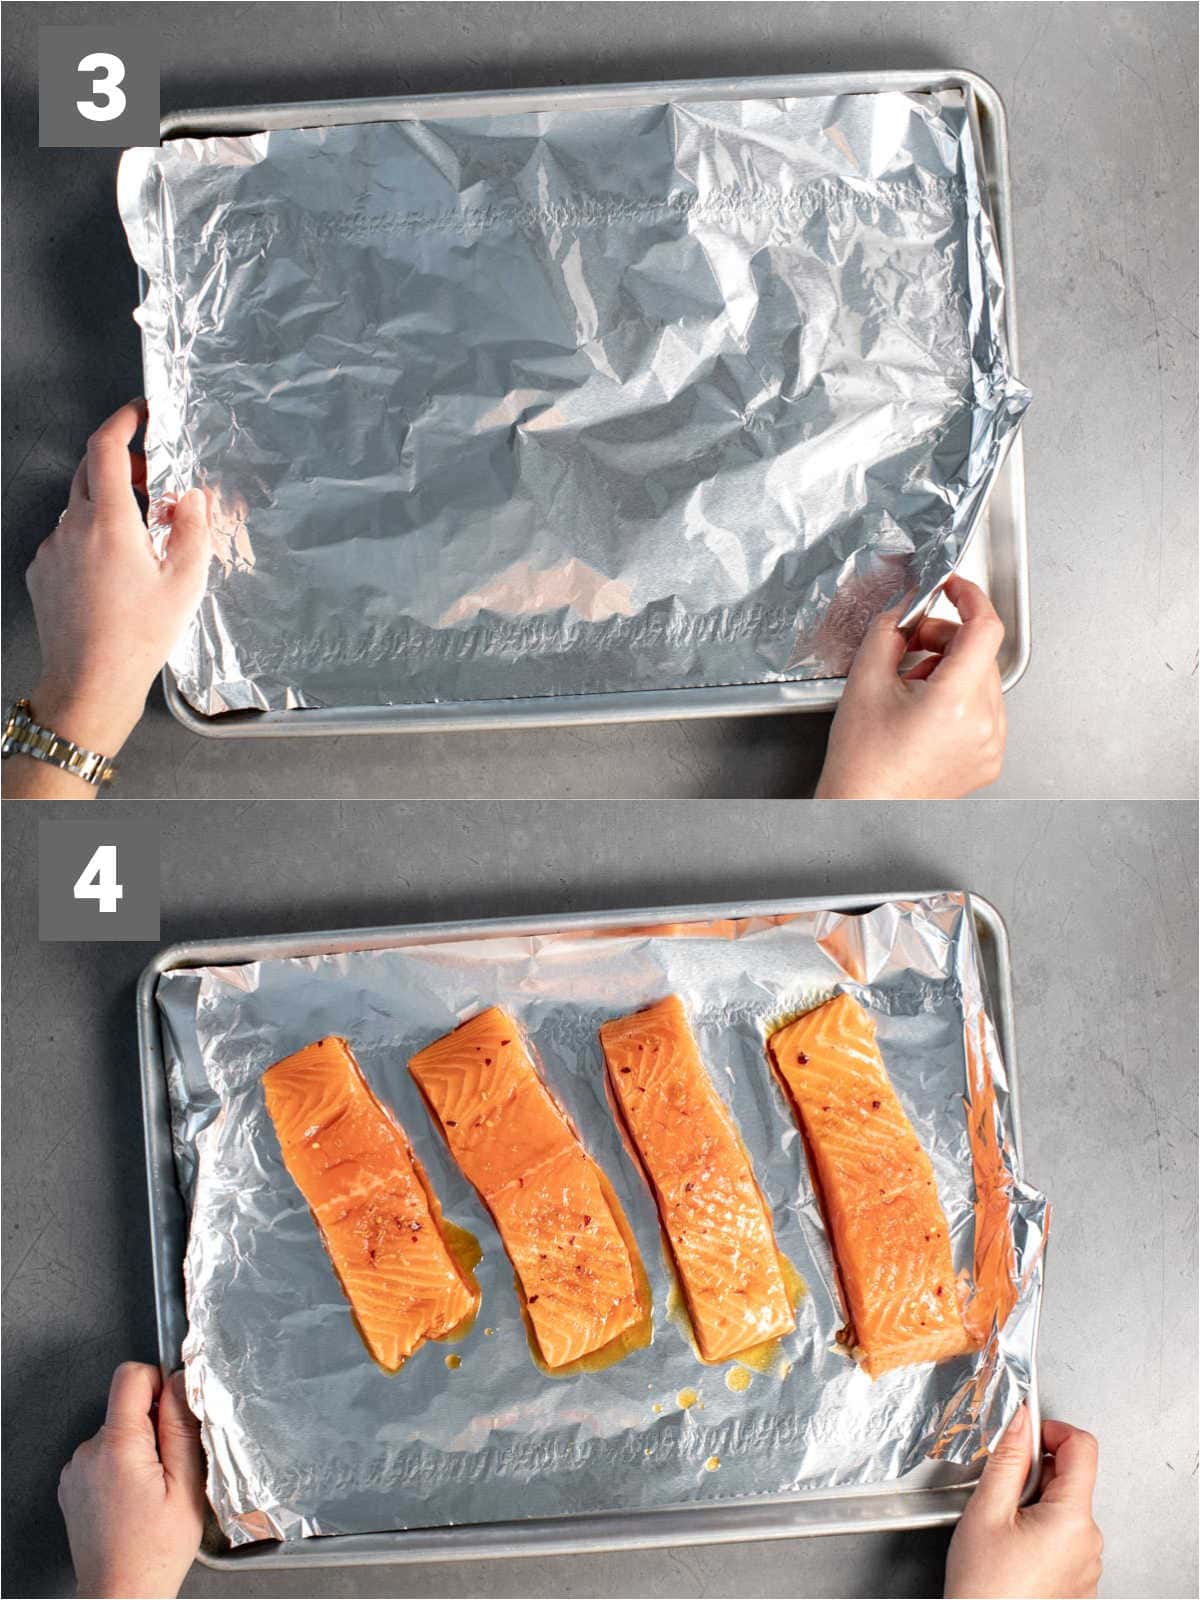 maple glazed salmon step 3 and 4